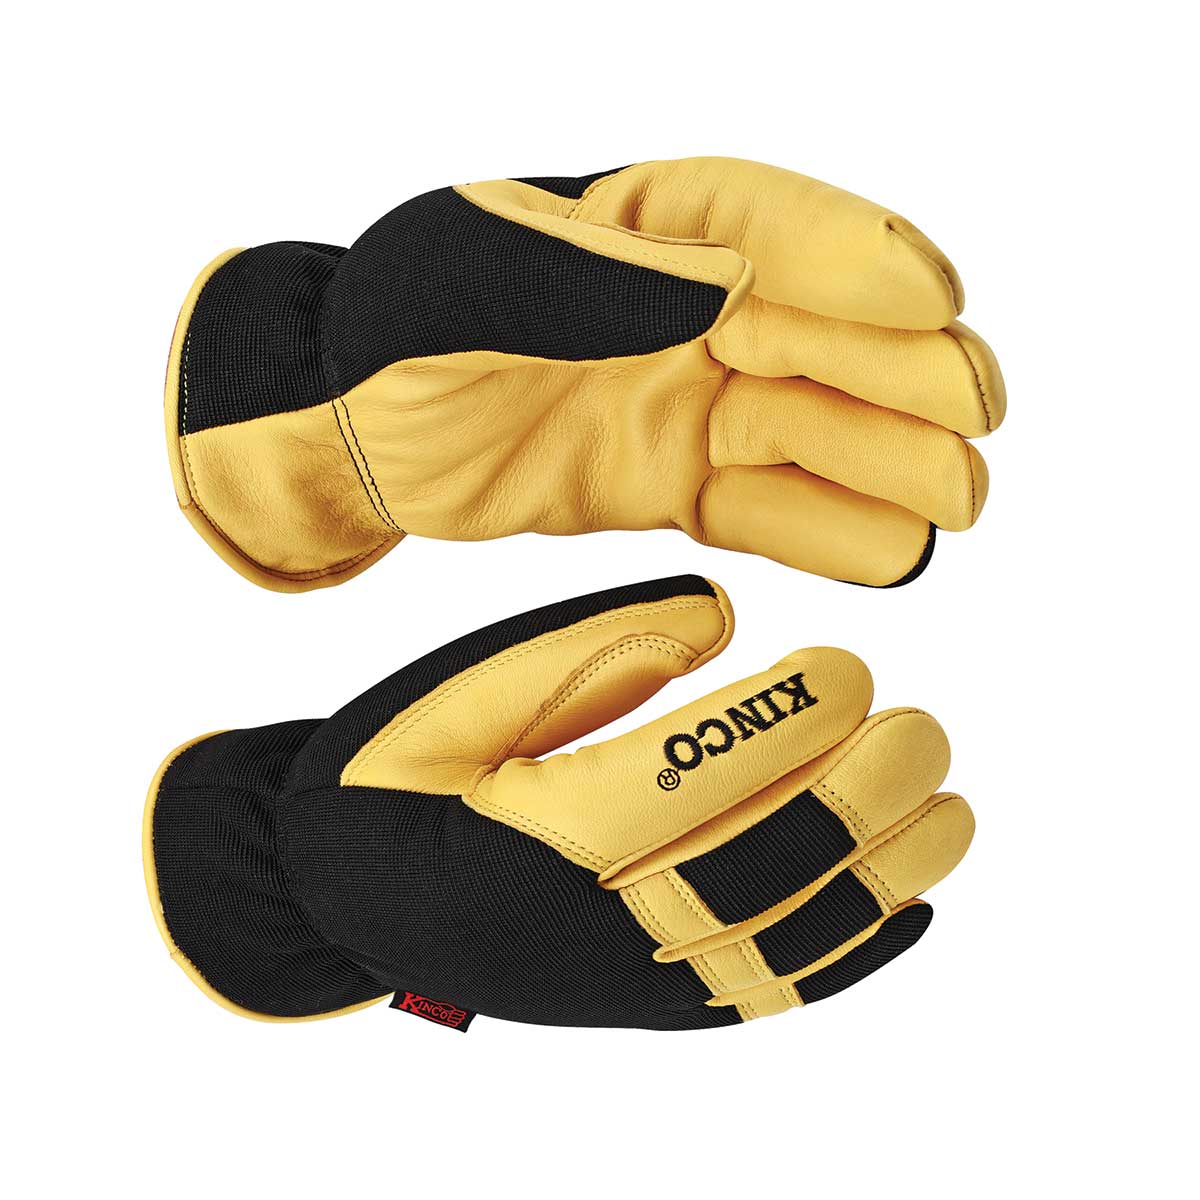 KincoPro Lined Premium Grain Deerskin & Synthetic Hybrid Gloves